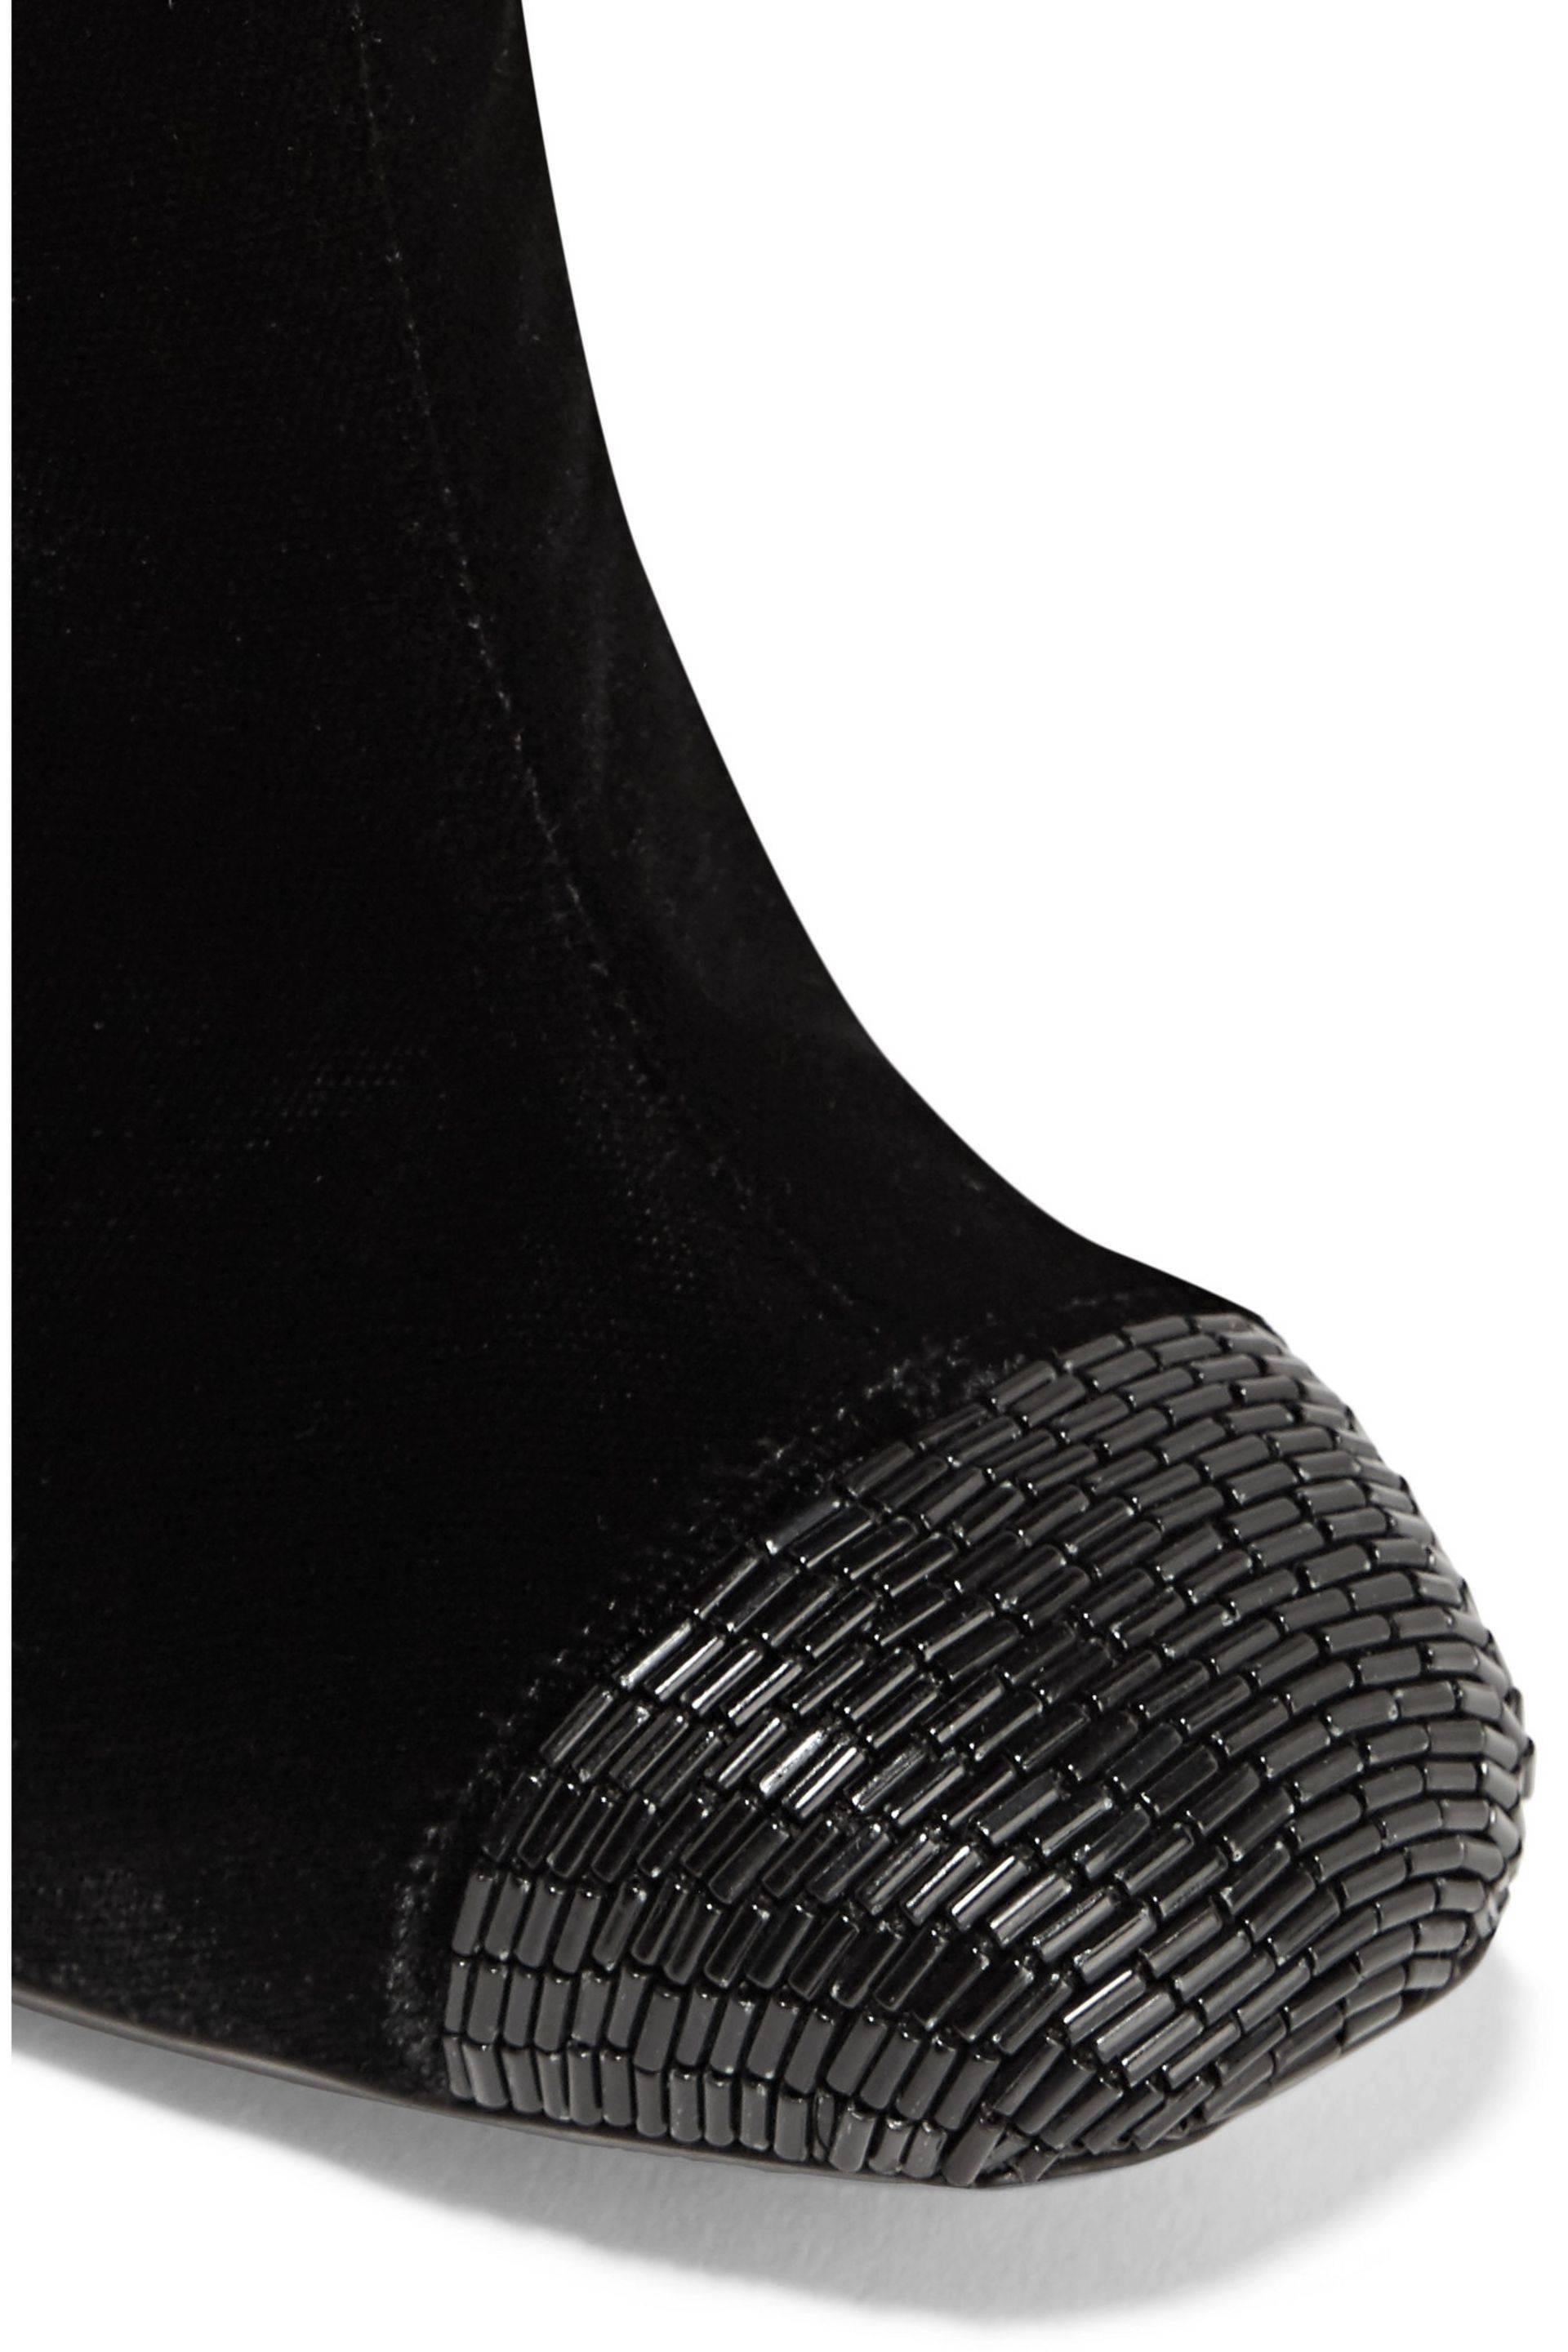 New $2700 Tom Ford Bead-embellished Black Velvet High Heel Boots 36.5 - 6.5 1